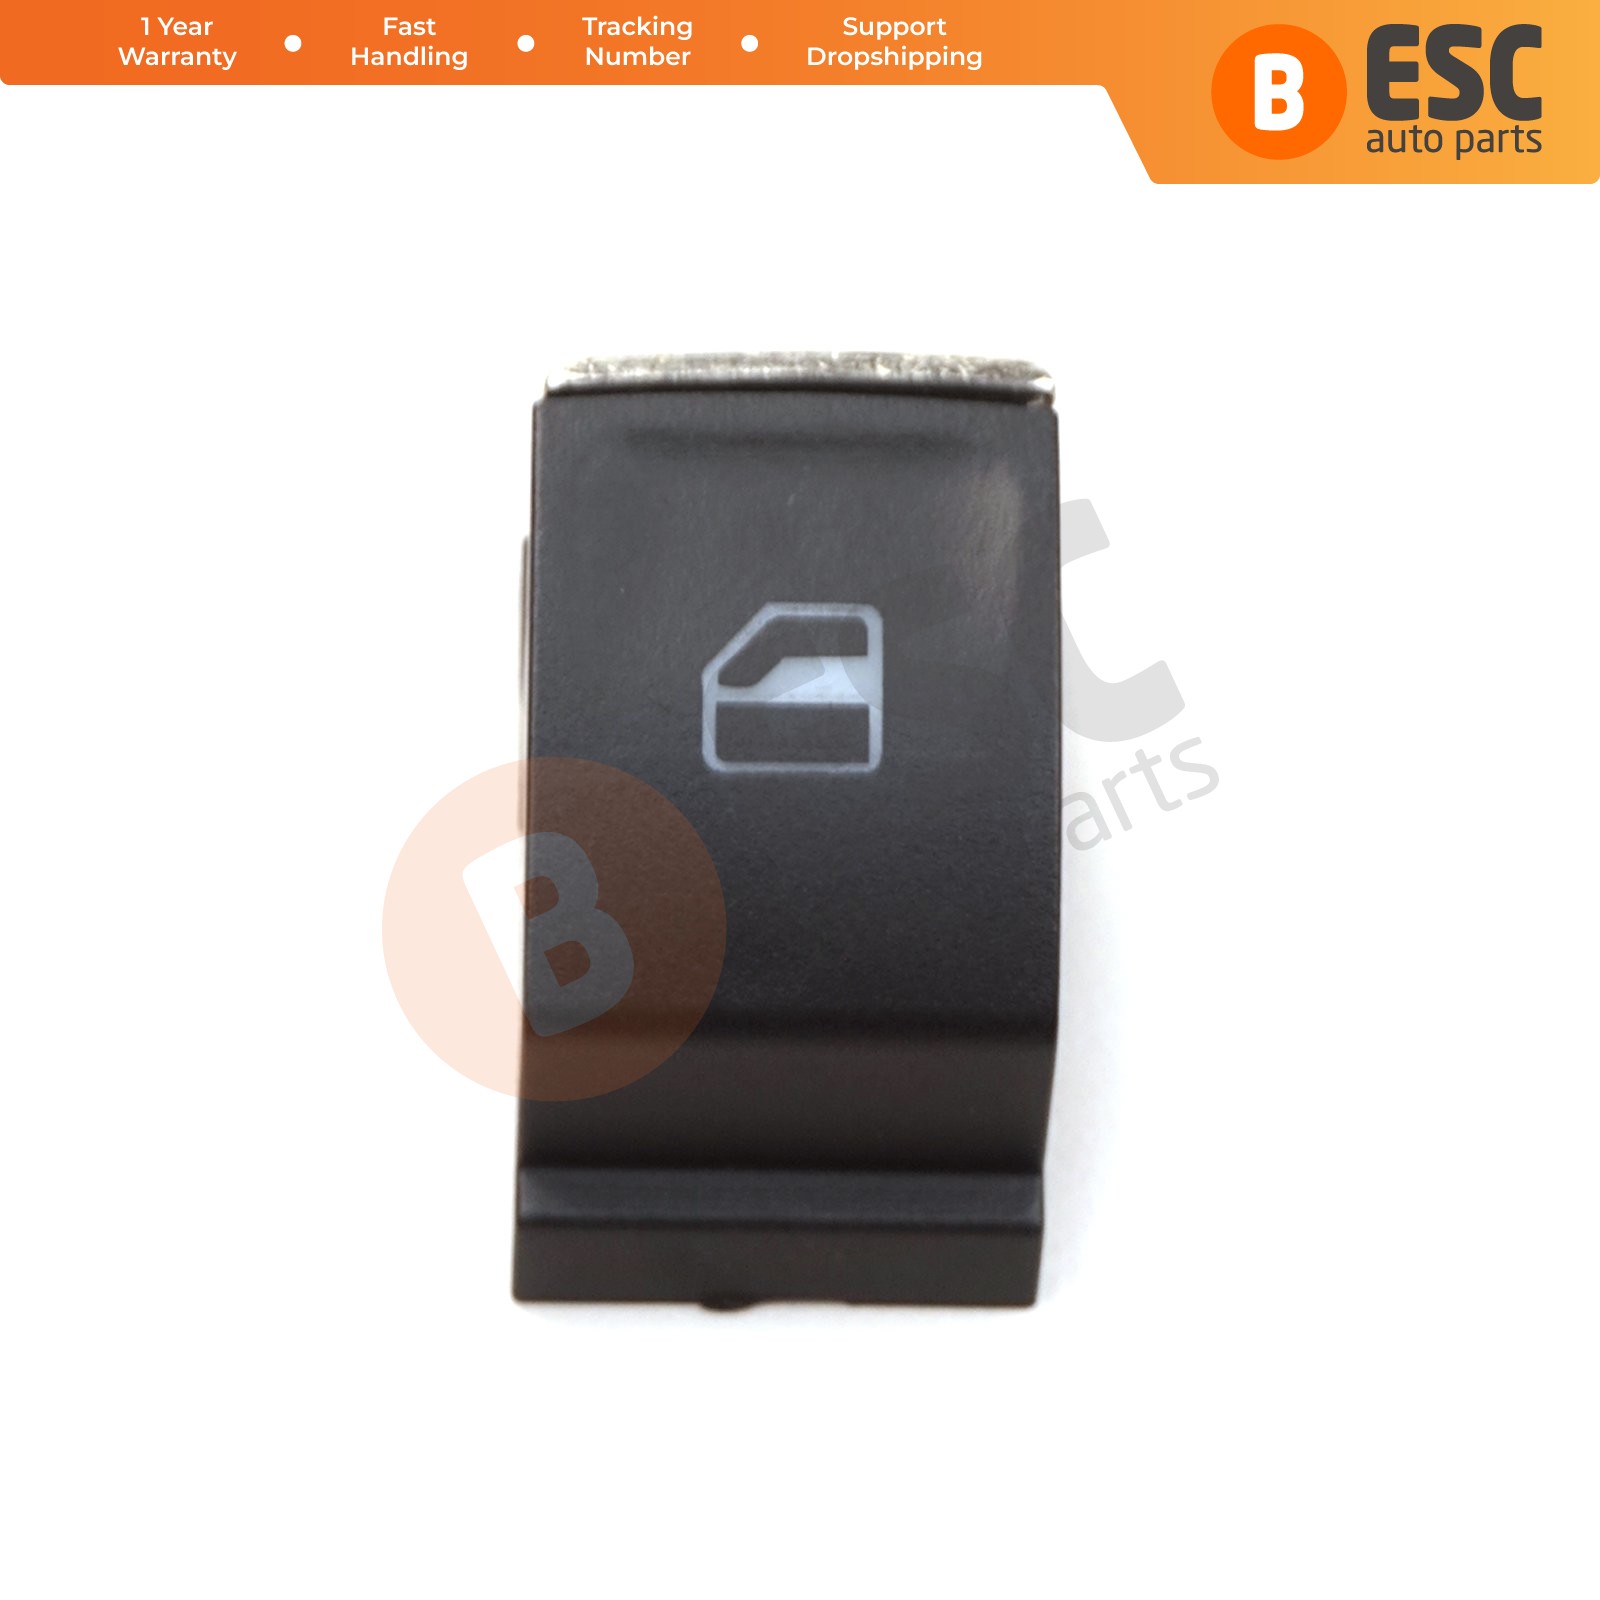  ESC EDP998 - Tapa de botón para interruptor de ventana  5G0959857 para VW Golf MK7 Passat B8 Tiguan Touran Seat Skoda : Automotriz